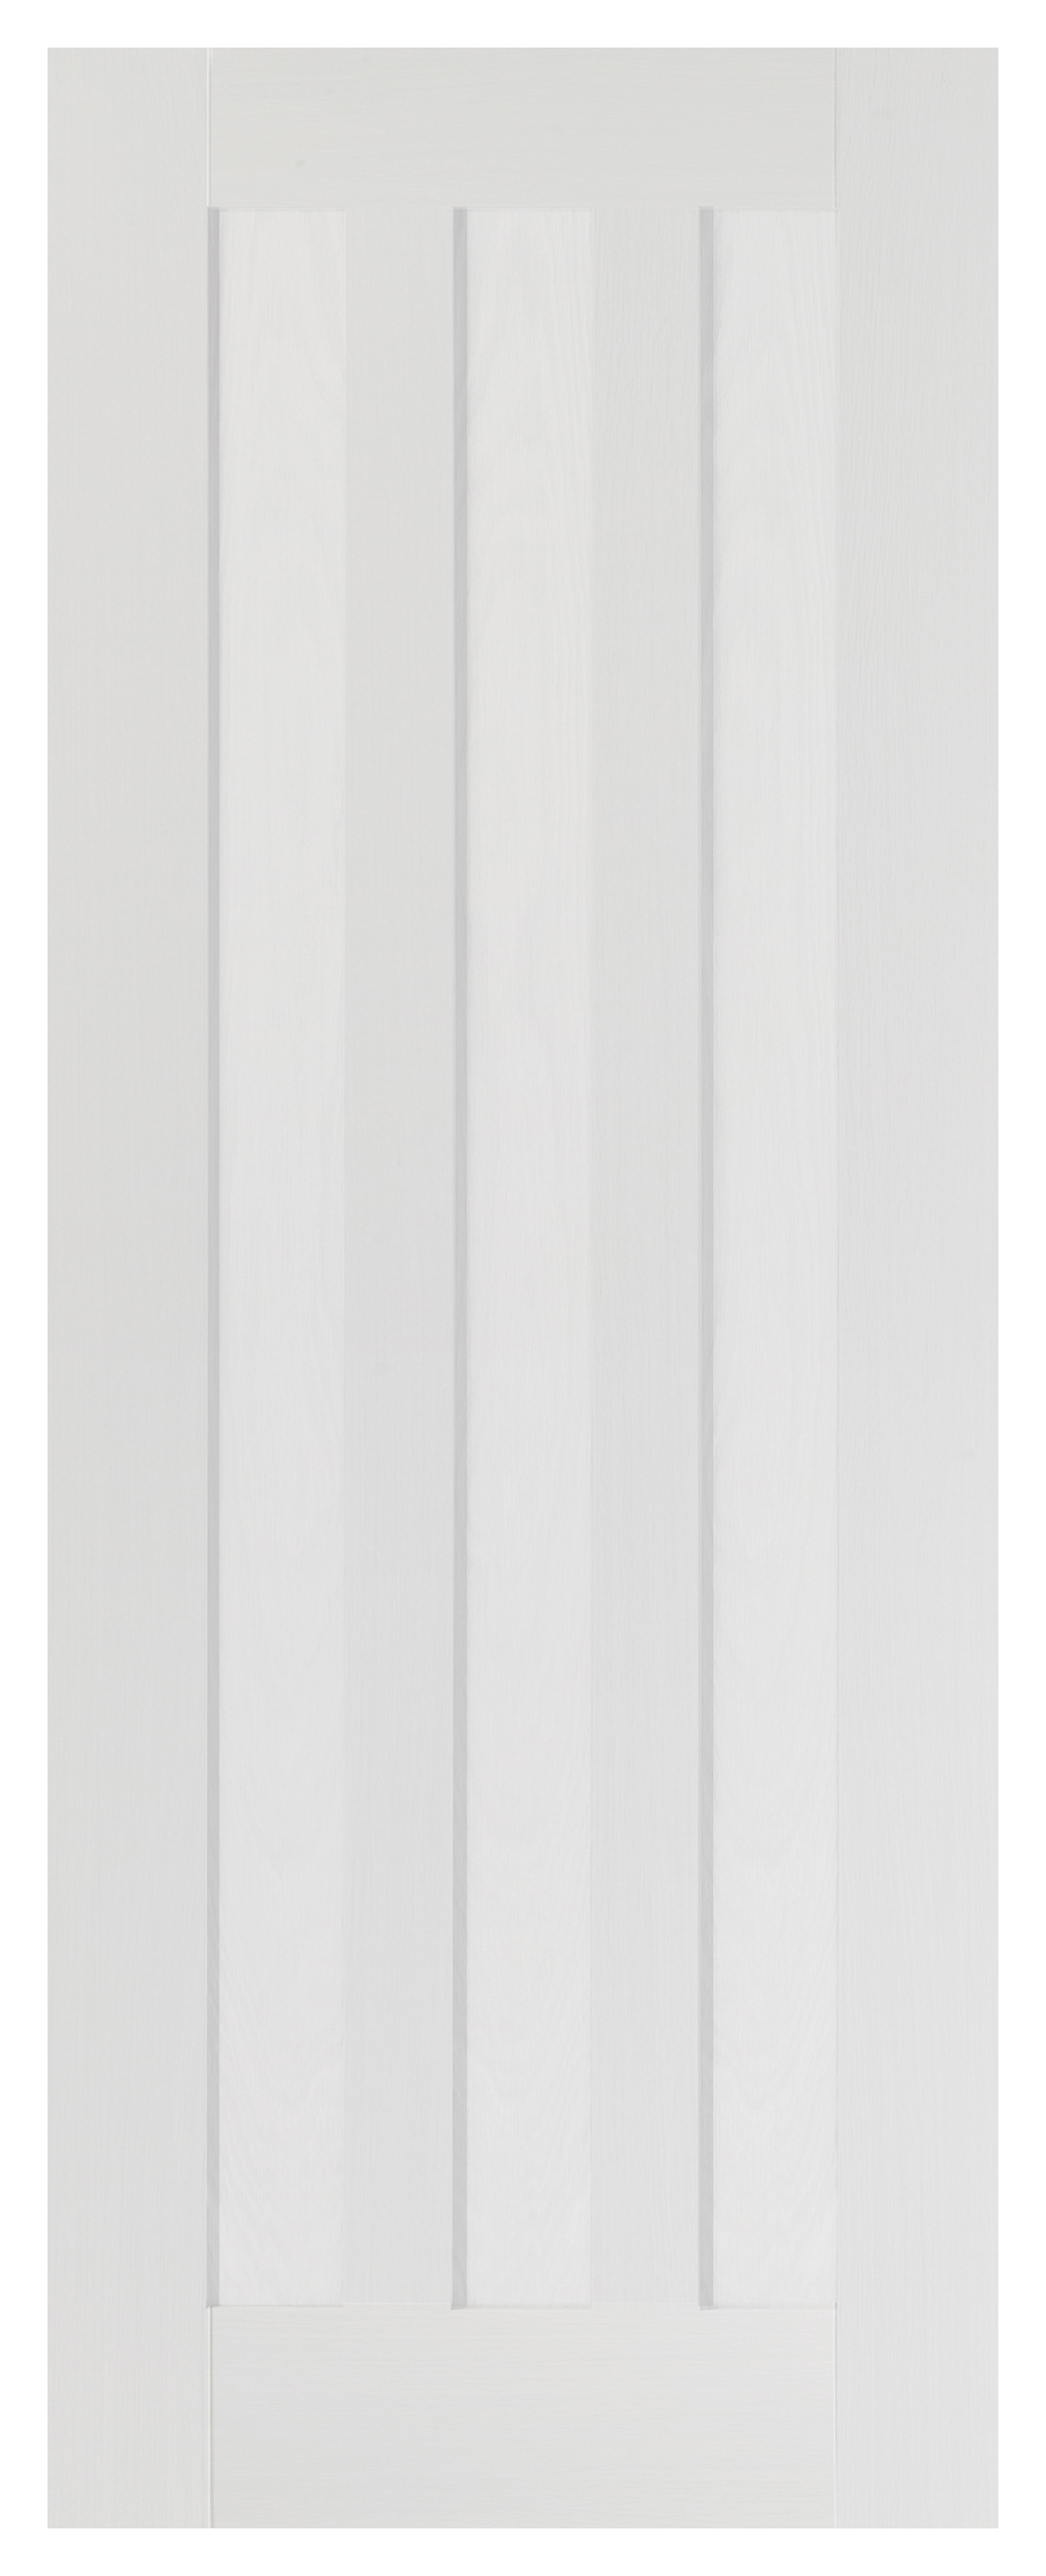 Image of LPD Internal Idaho 3 Panel Primed White FD30 Fire Door - 838 x 1981mm